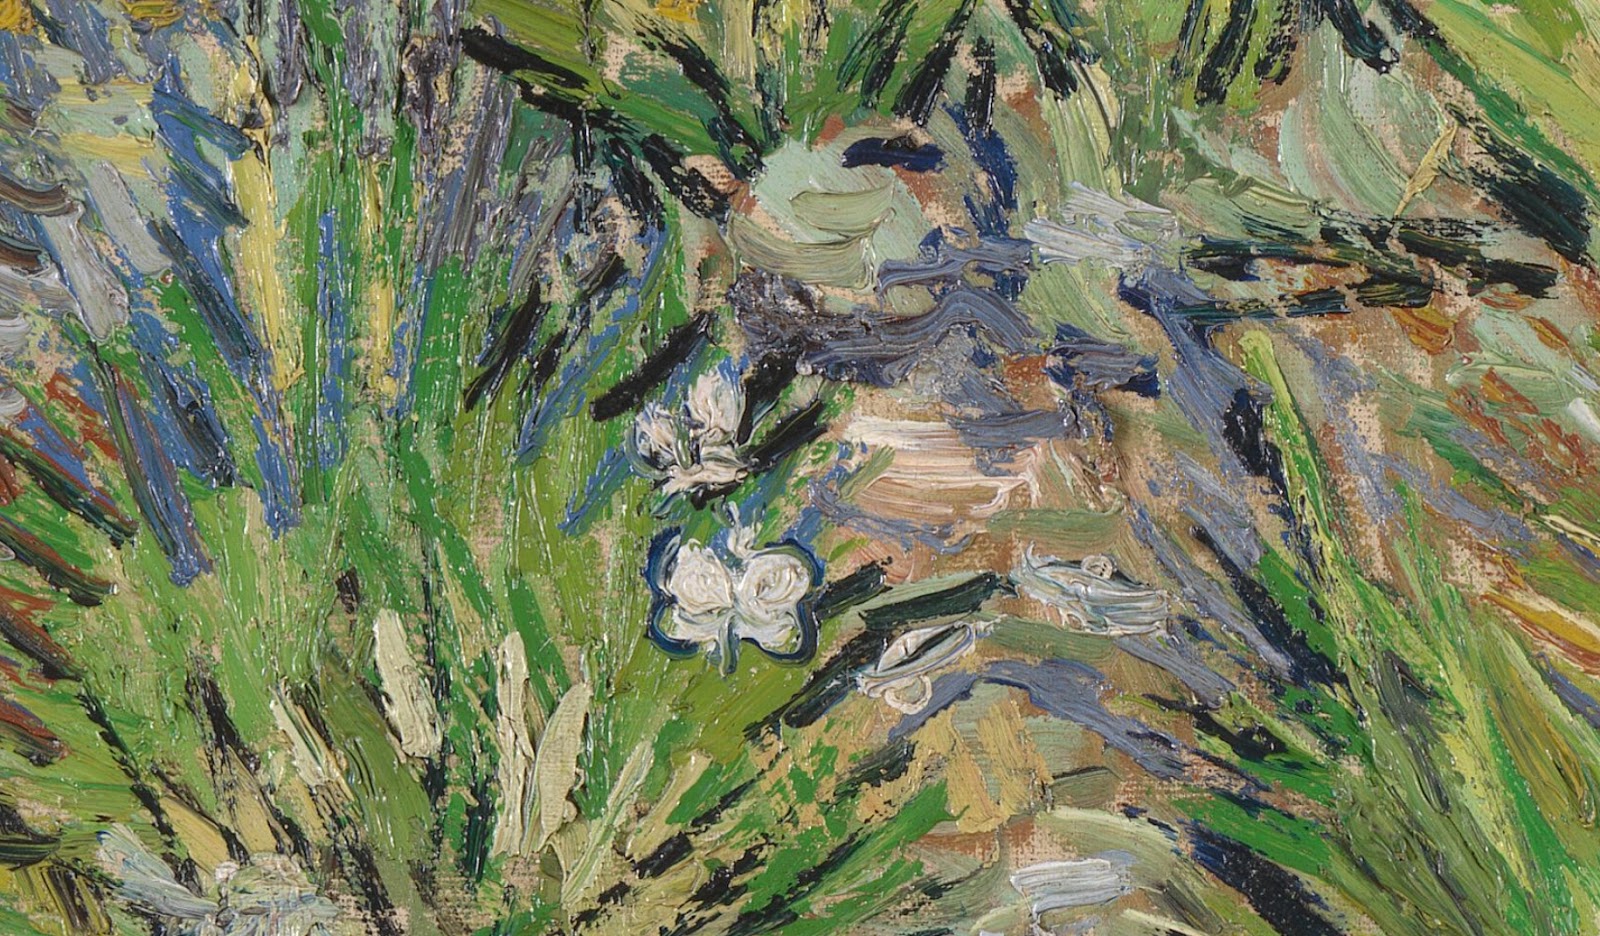 Vincent+Van+Gogh-1853-1890 (887).jpg